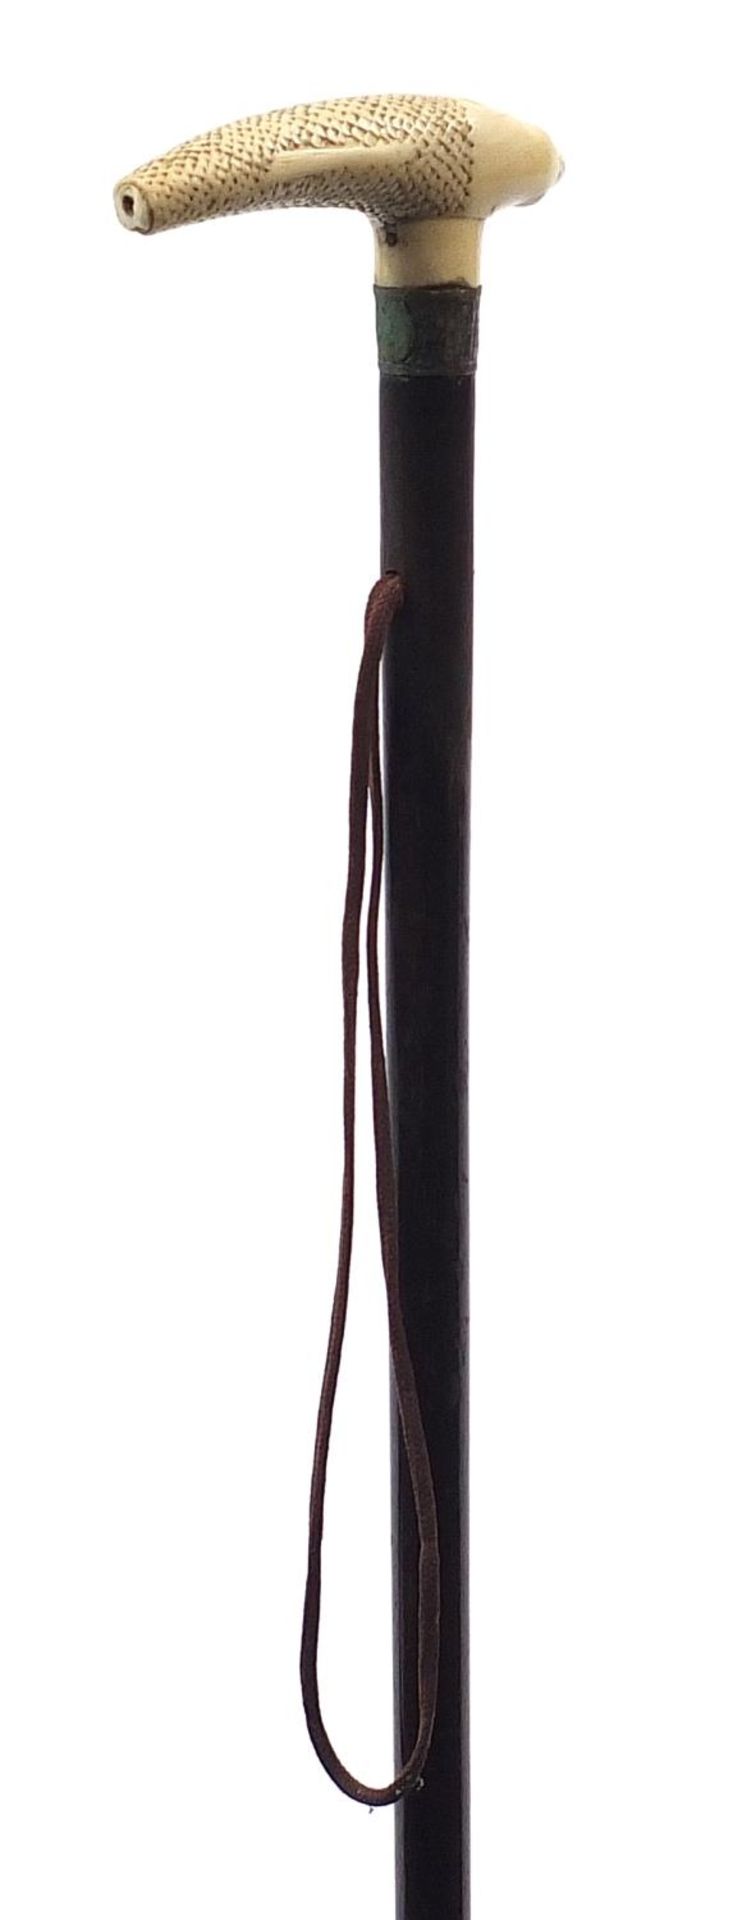 Hardwood walking stick with carved ivory Koi carp handle, 88cm in length - Image 5 of 7